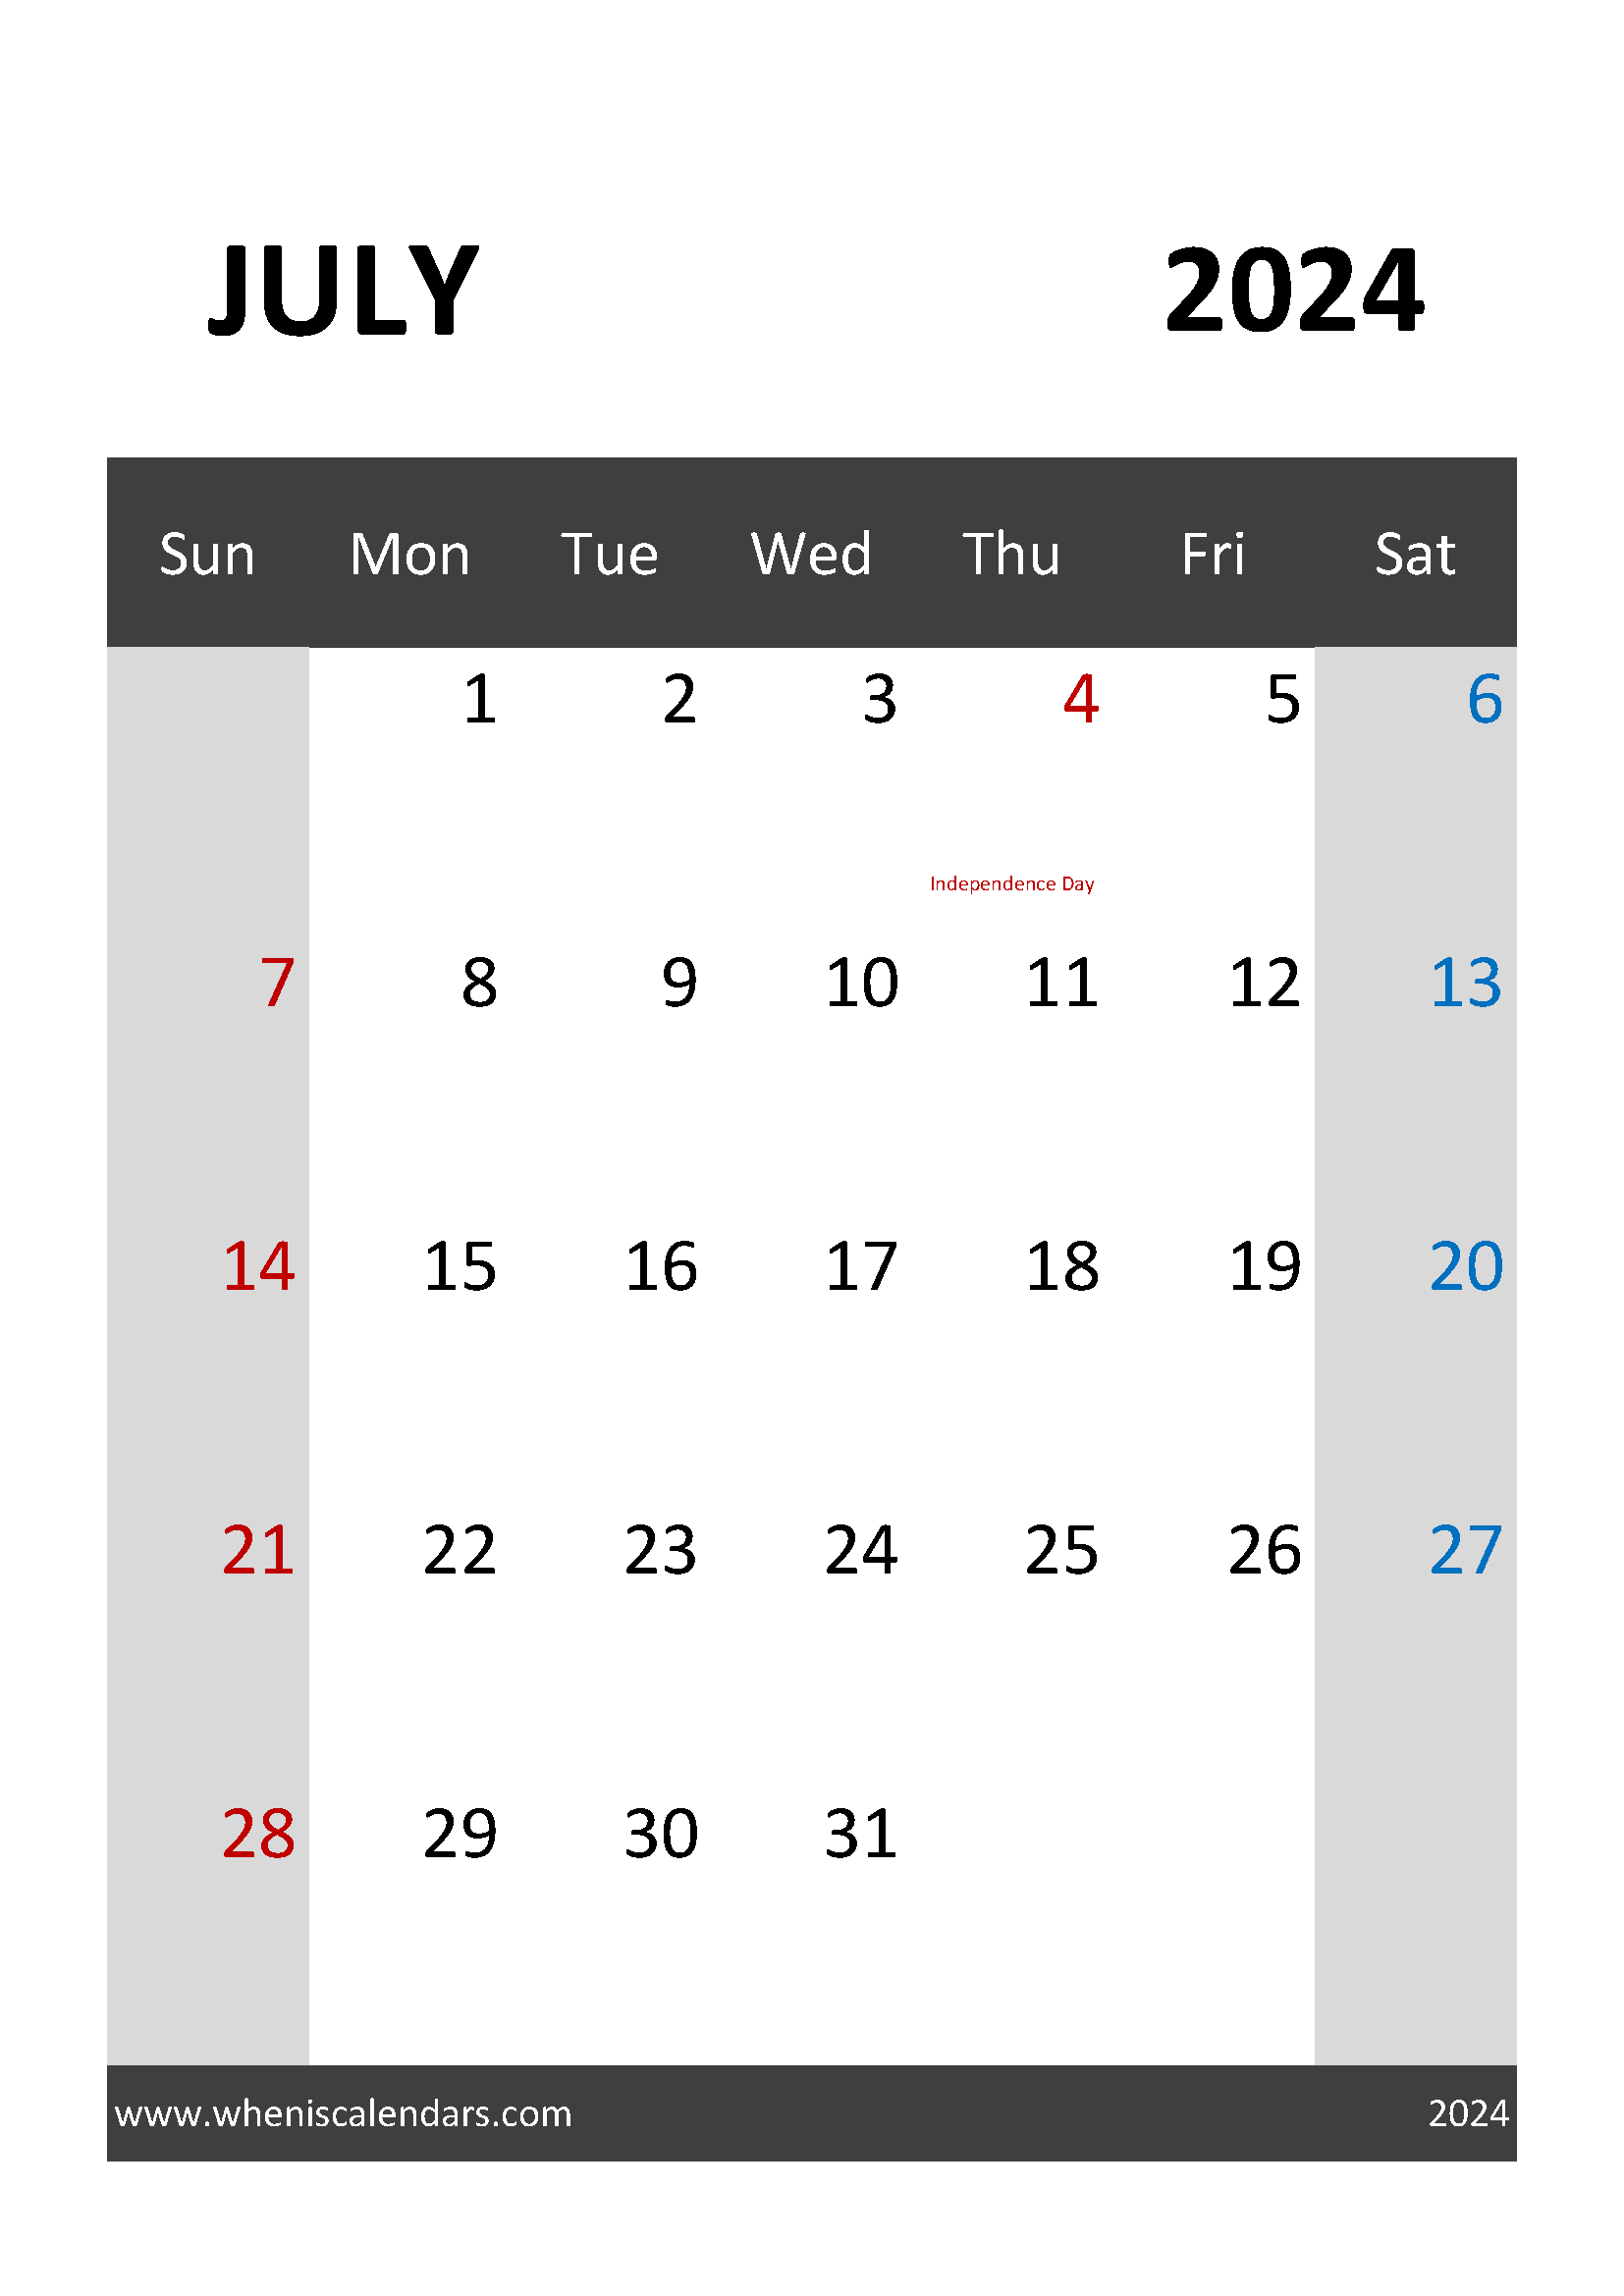 July 2024 Calendar planner Printable Monthly Calendar